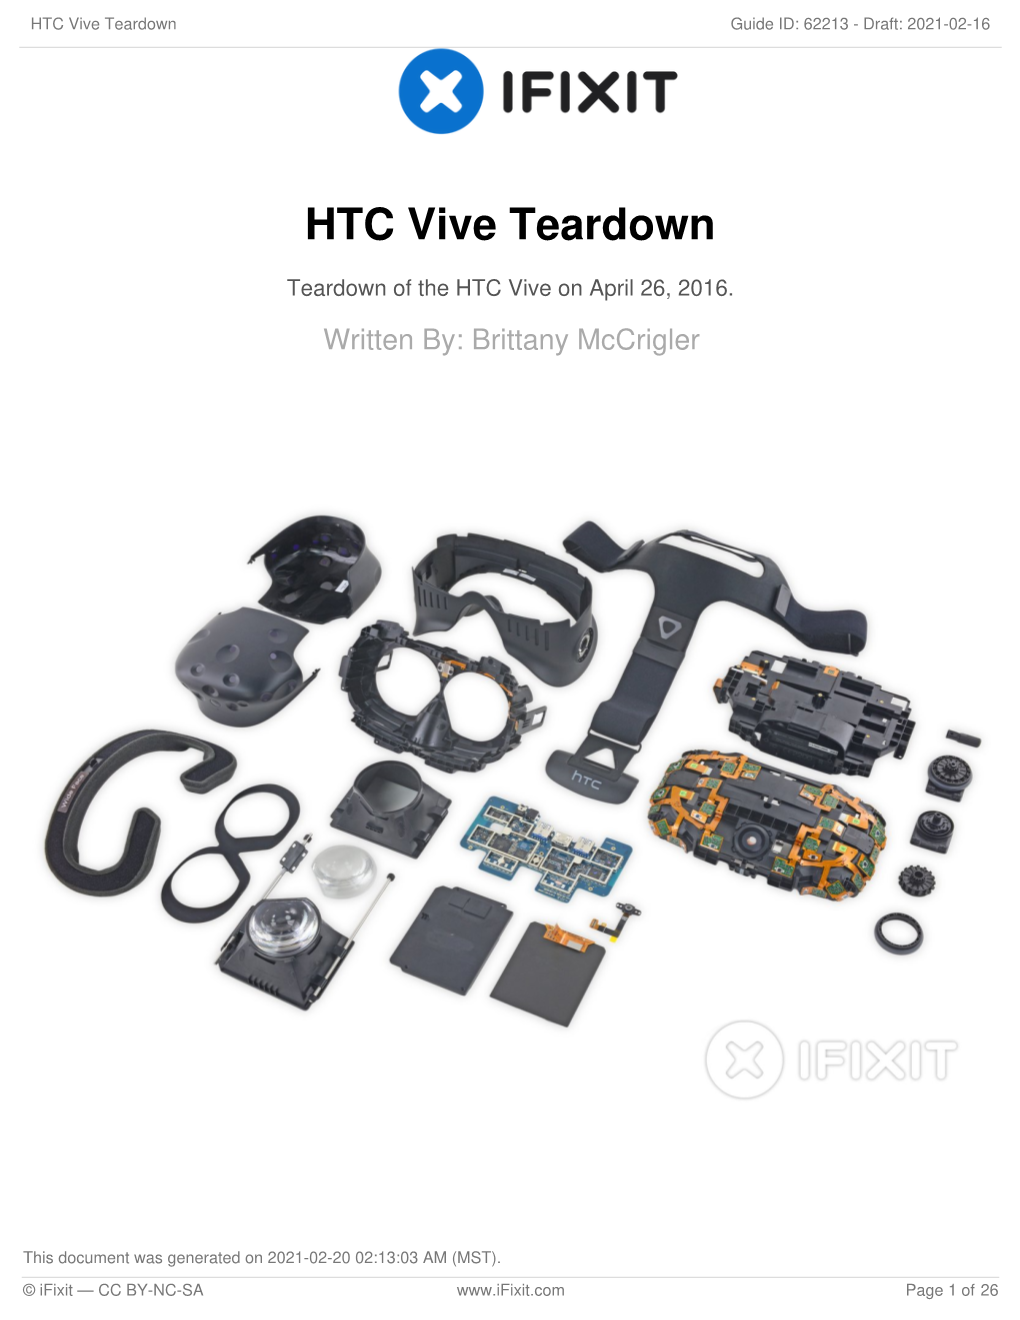 HTC Vive Teardown Guide ID: 62213 - Draft: 2021-02-16